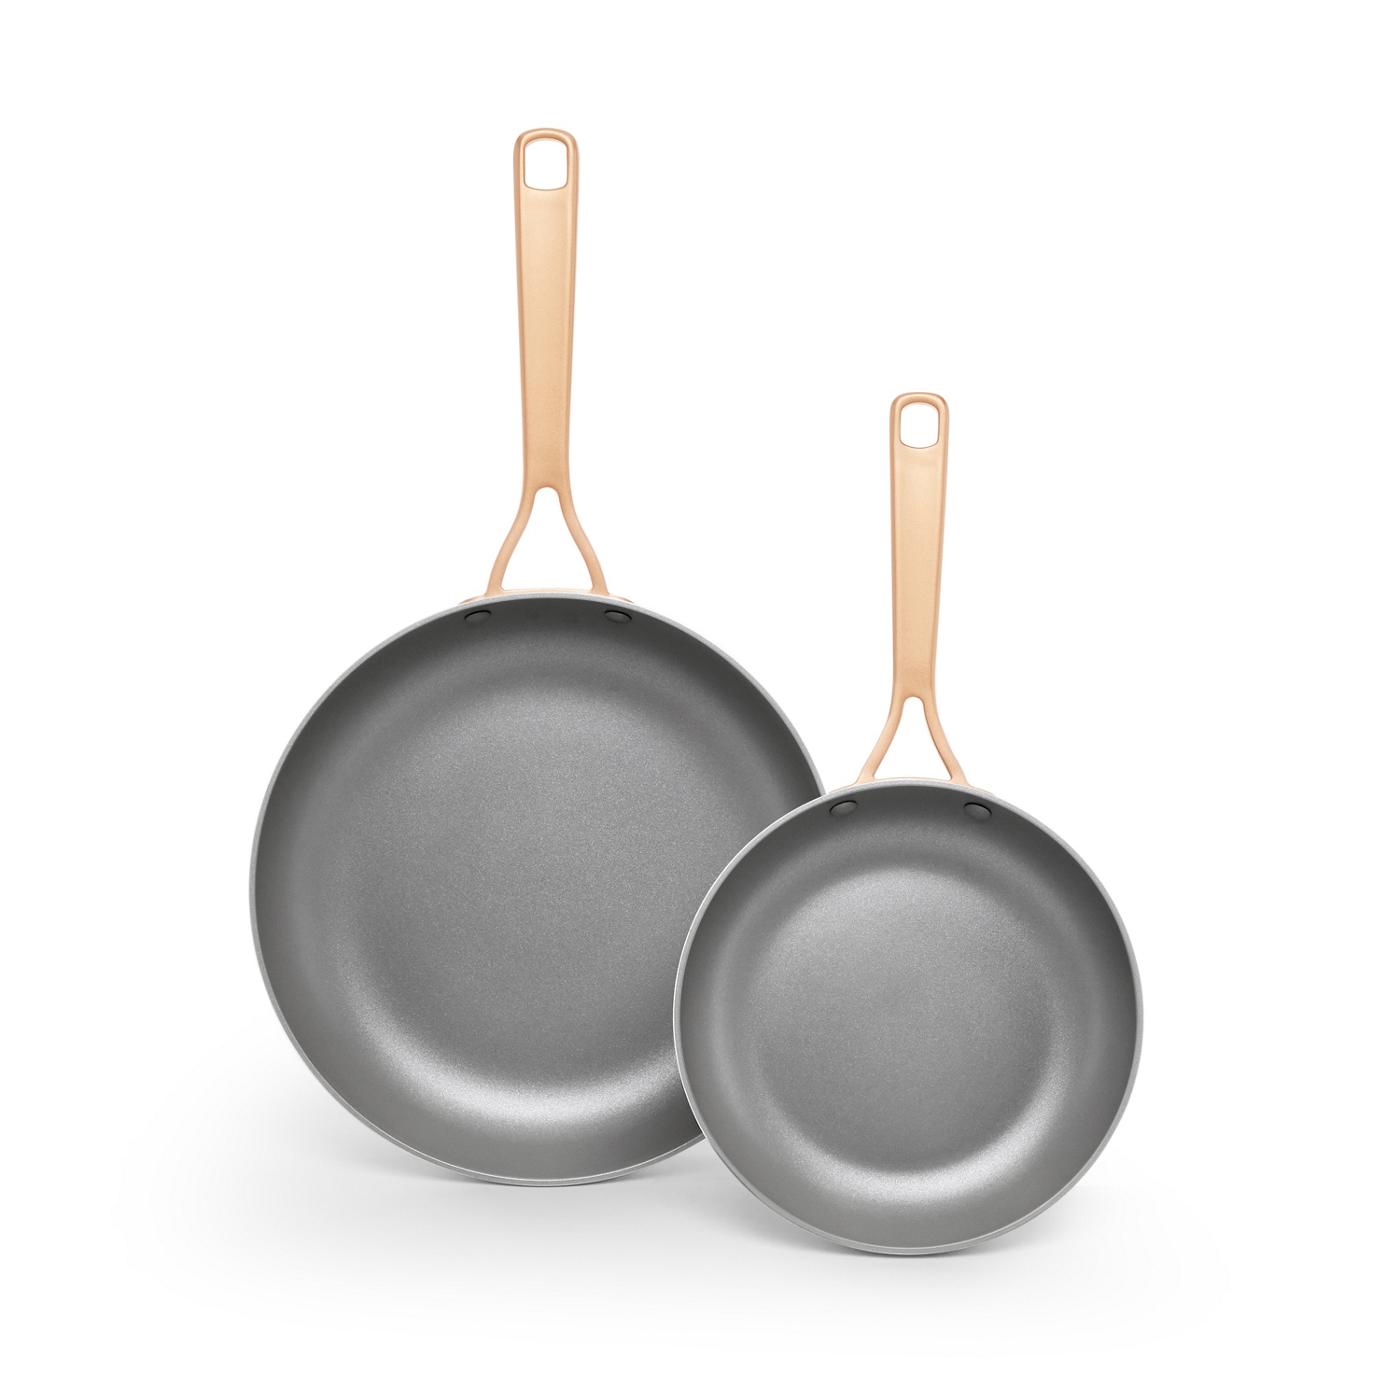 Cocinaware Red & Gray Tortilla Pan - Shop Frying Pans & Griddles at H-E-B